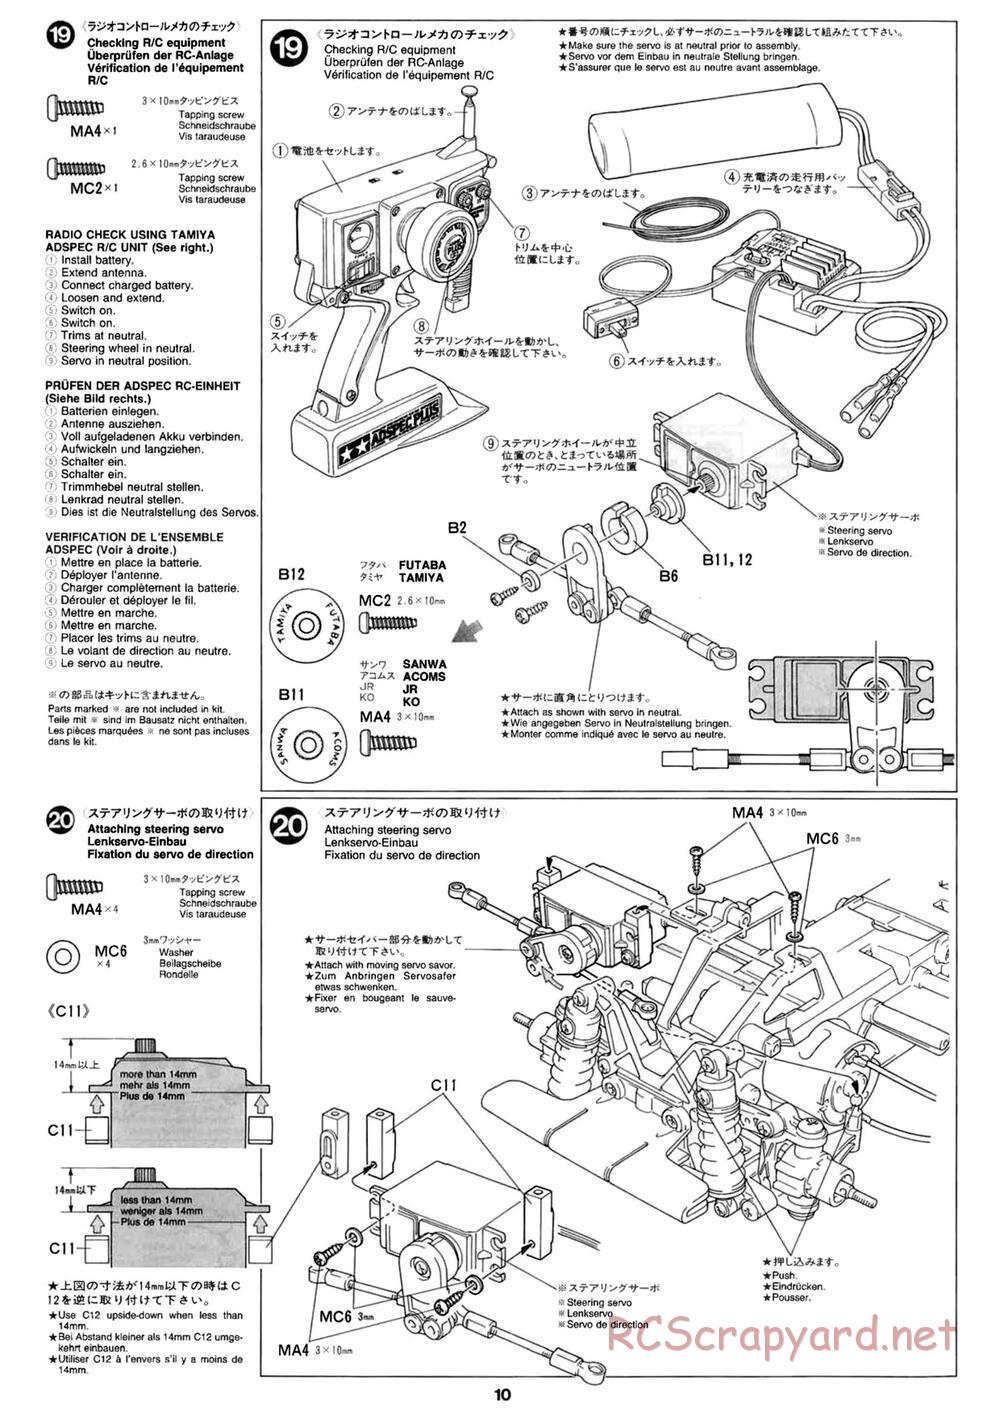 Tamiya - FF-02 Chassis - Manual - Page 10